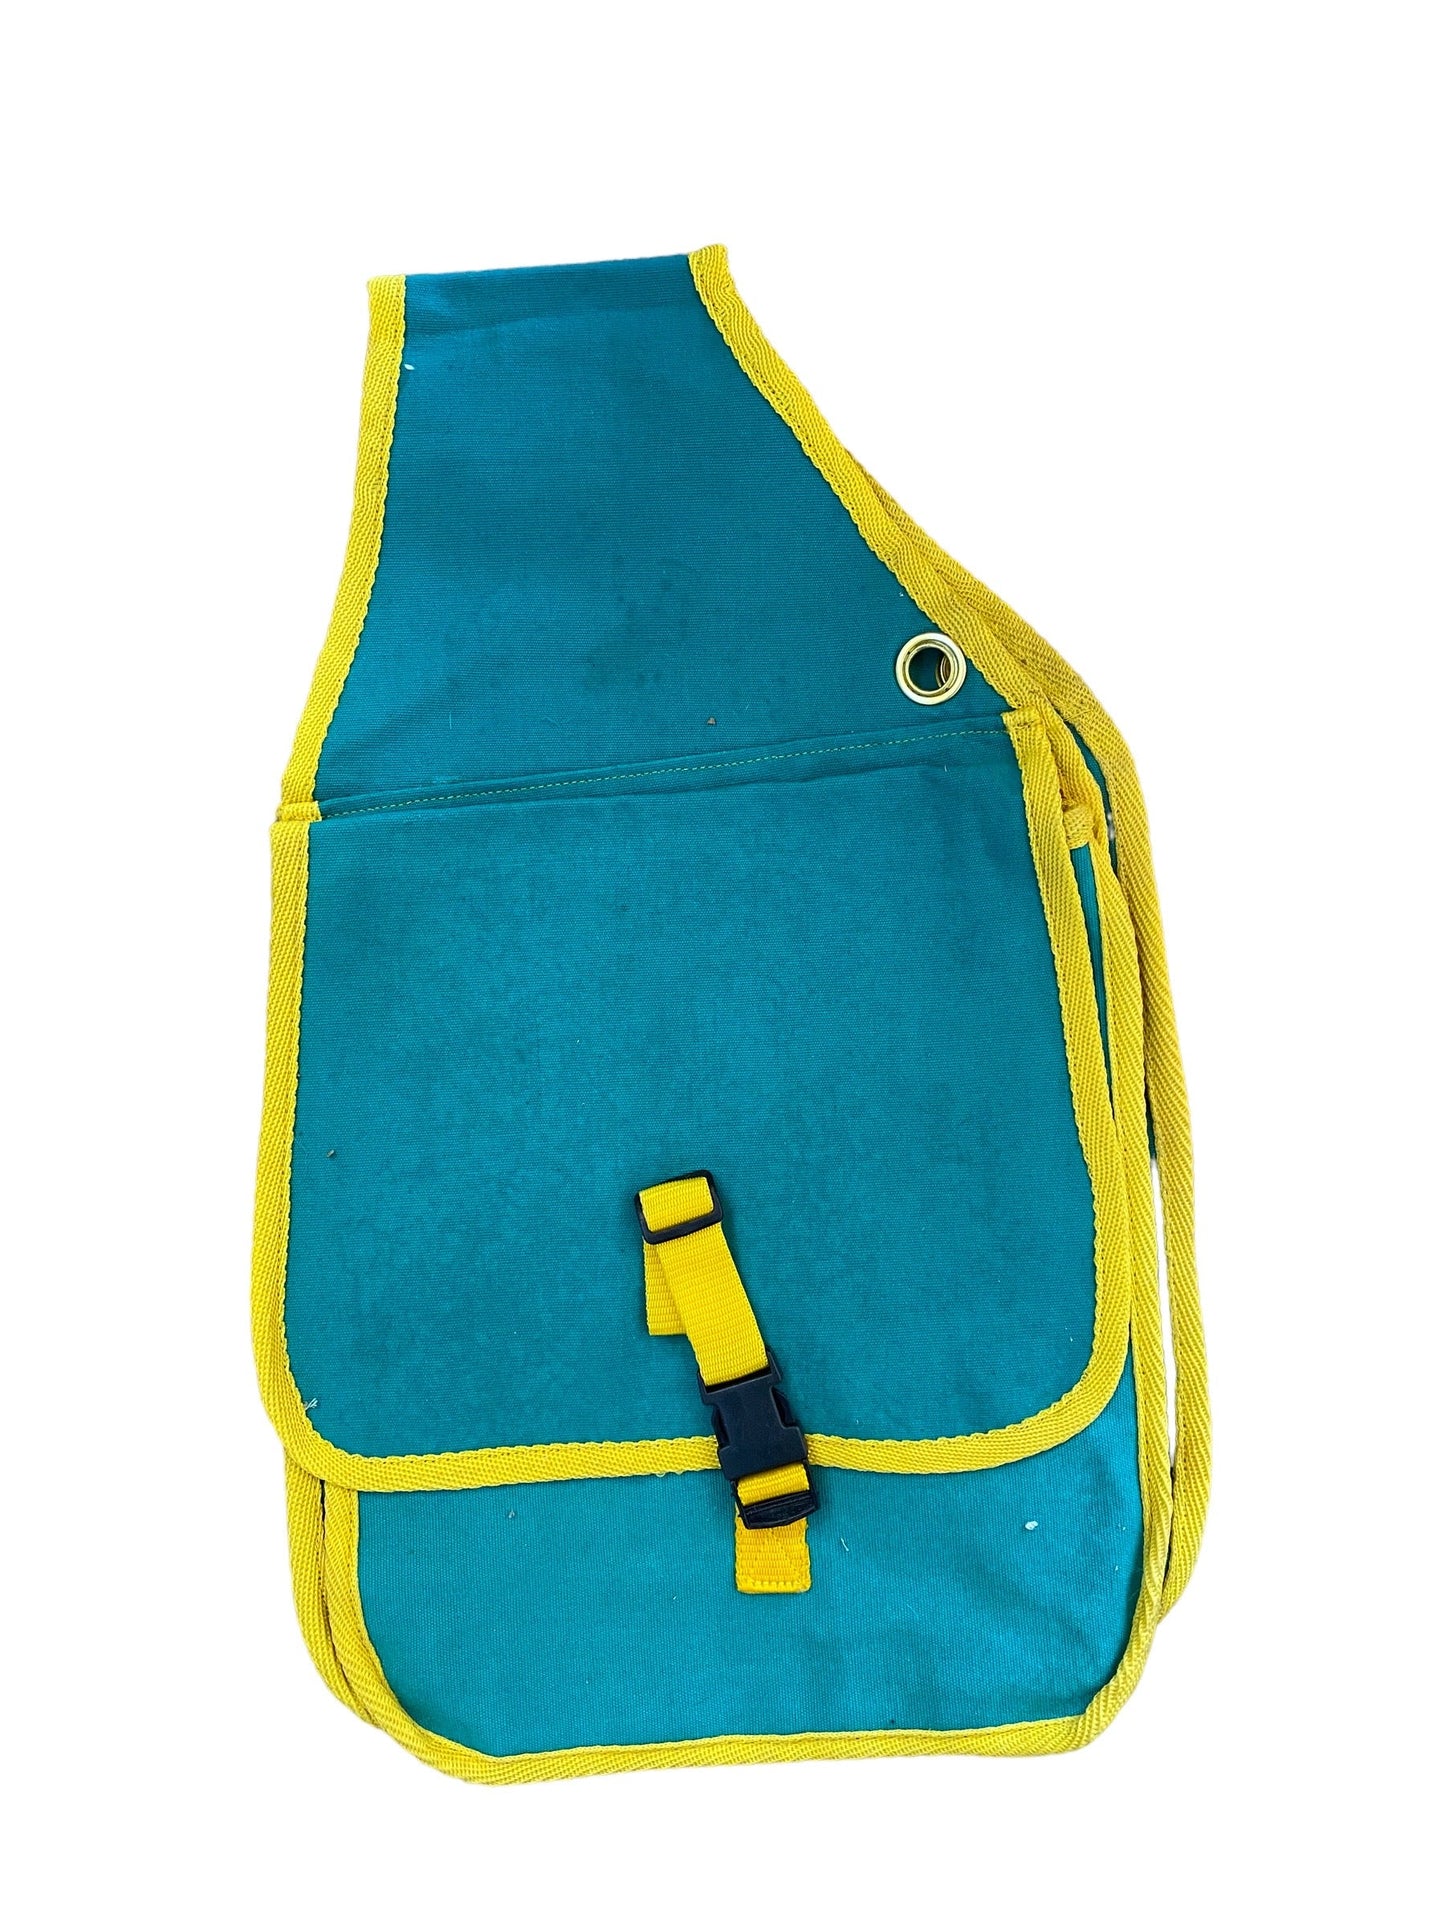 Saddle Bags LARGE Green/Yellow (2314214)